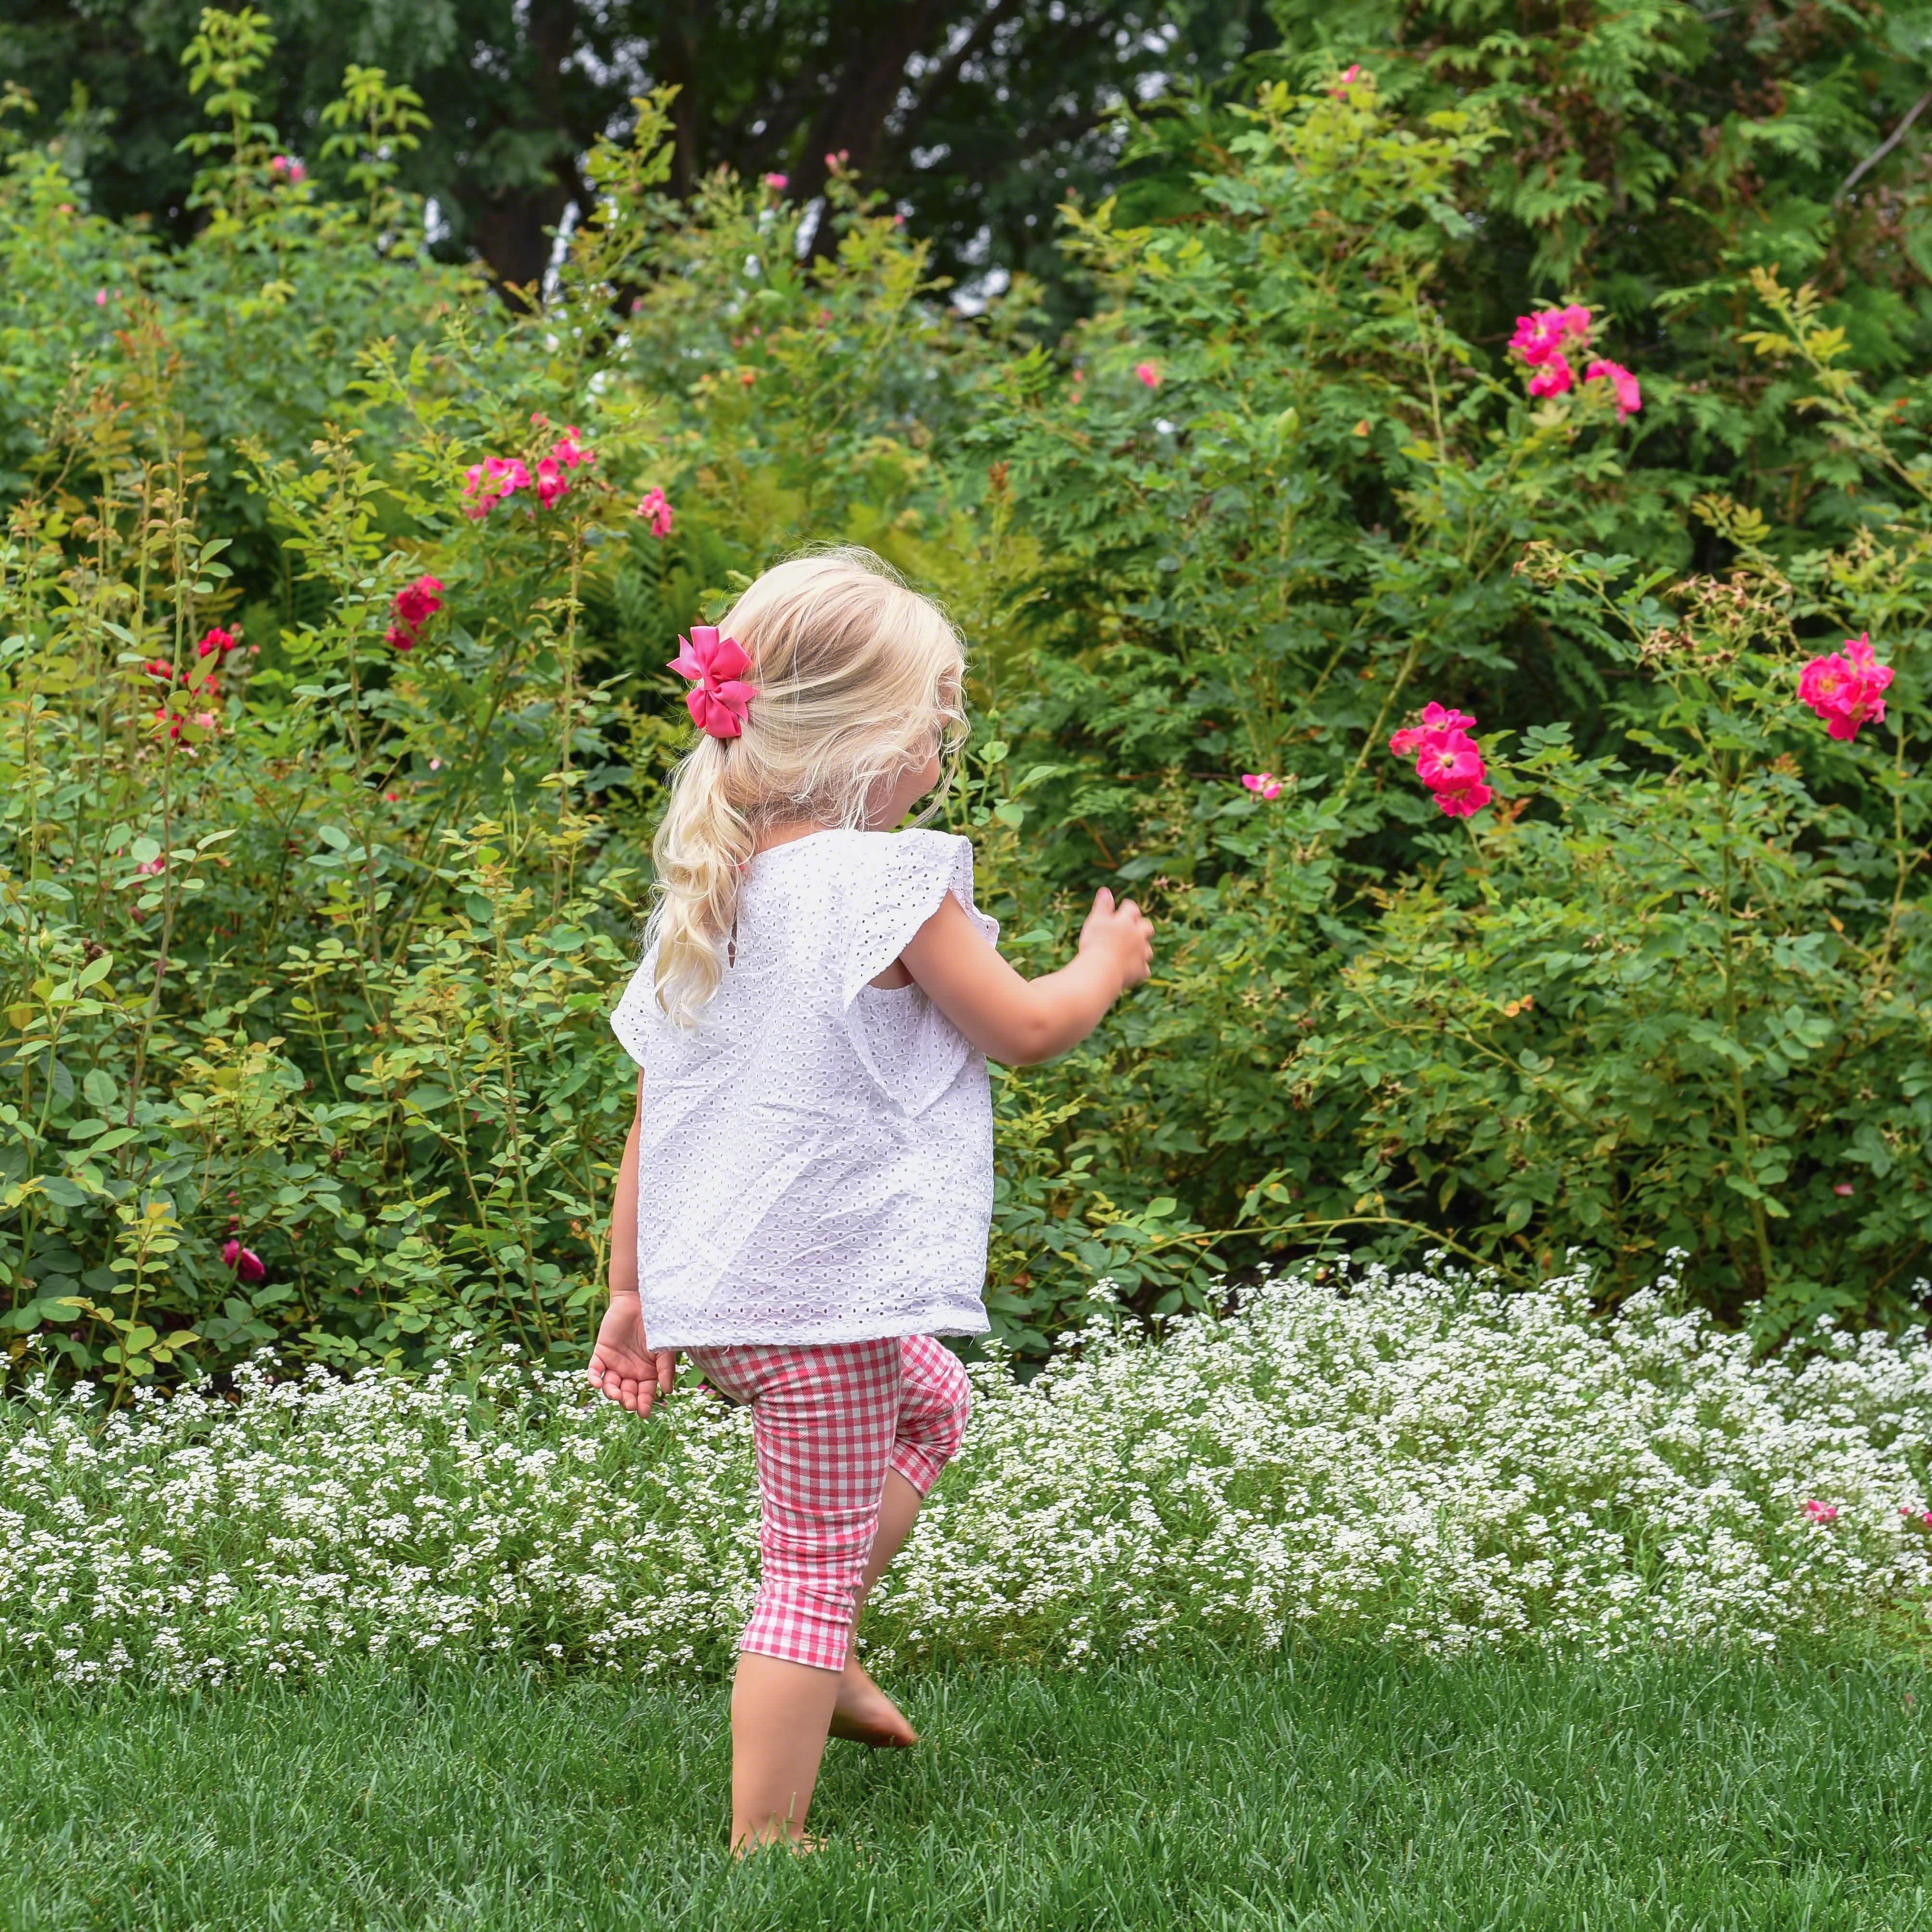 Young girl walking through flower garden